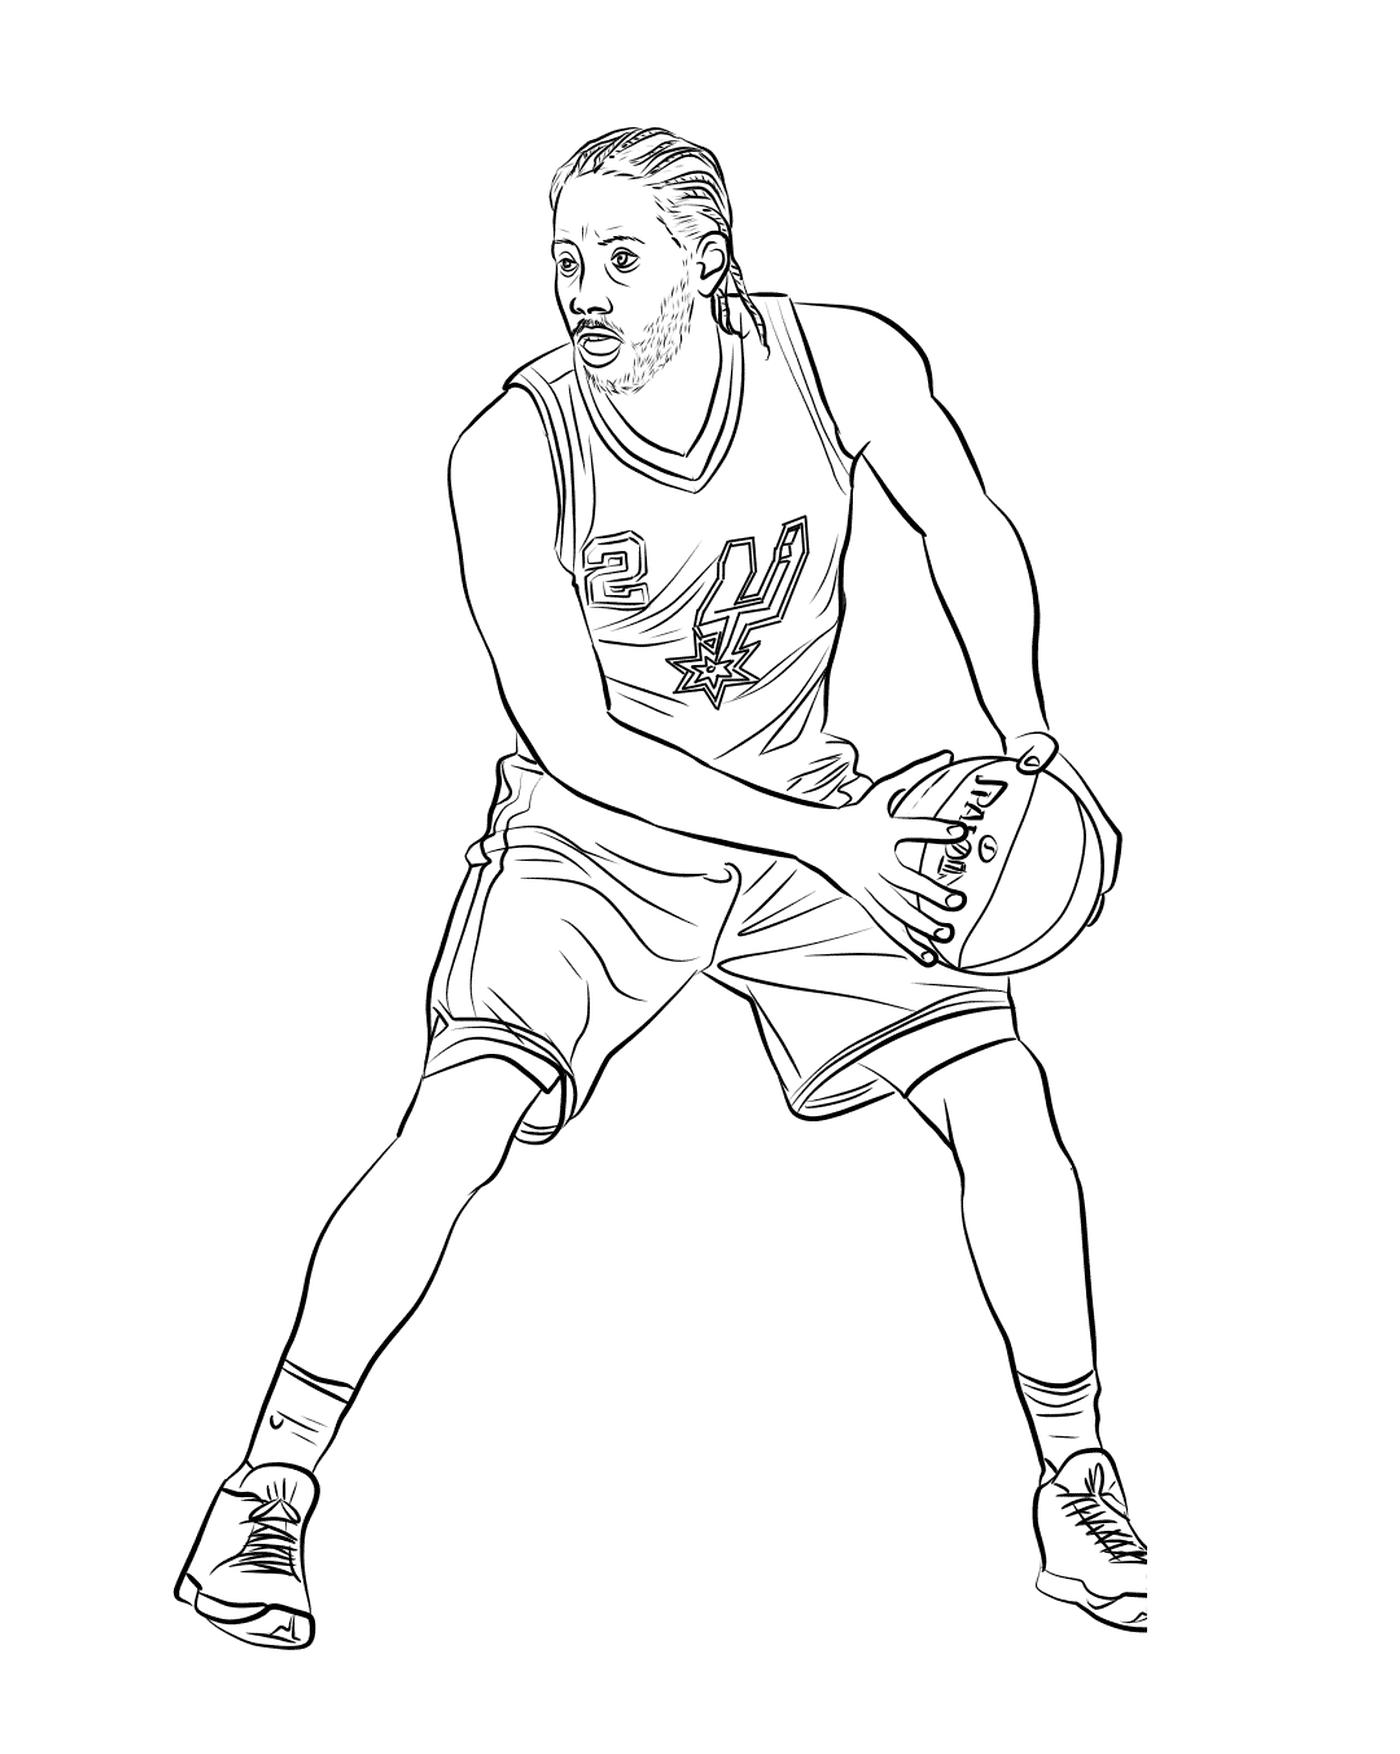  Kawhi Leonard, giocatore di basket 